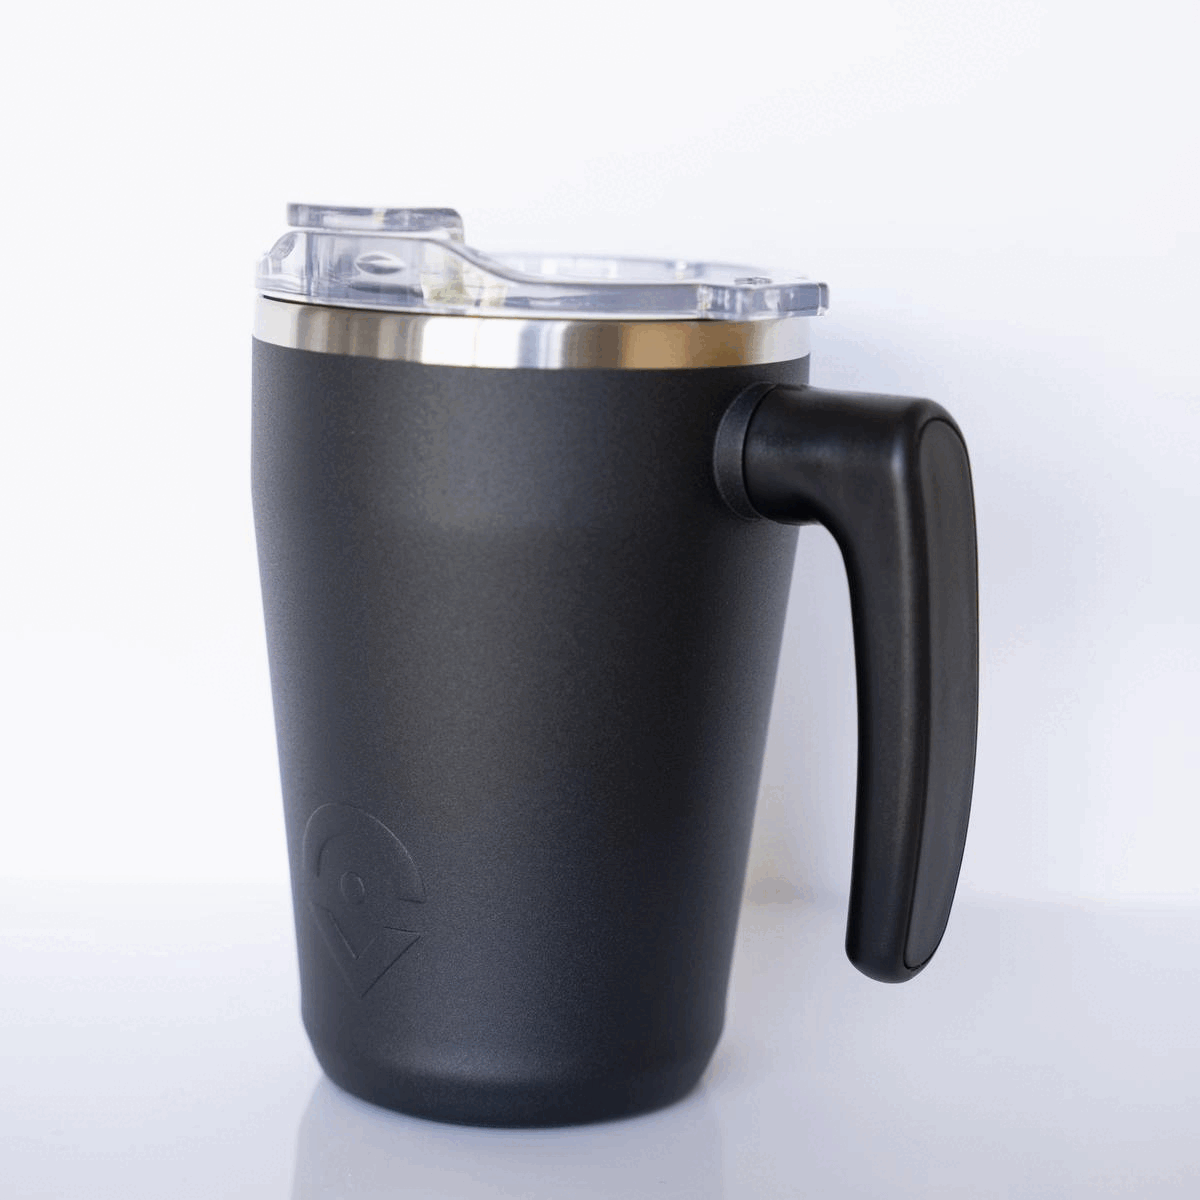 Outsider Coffee Mug - The Perfect Travel Mug - The AM (Black